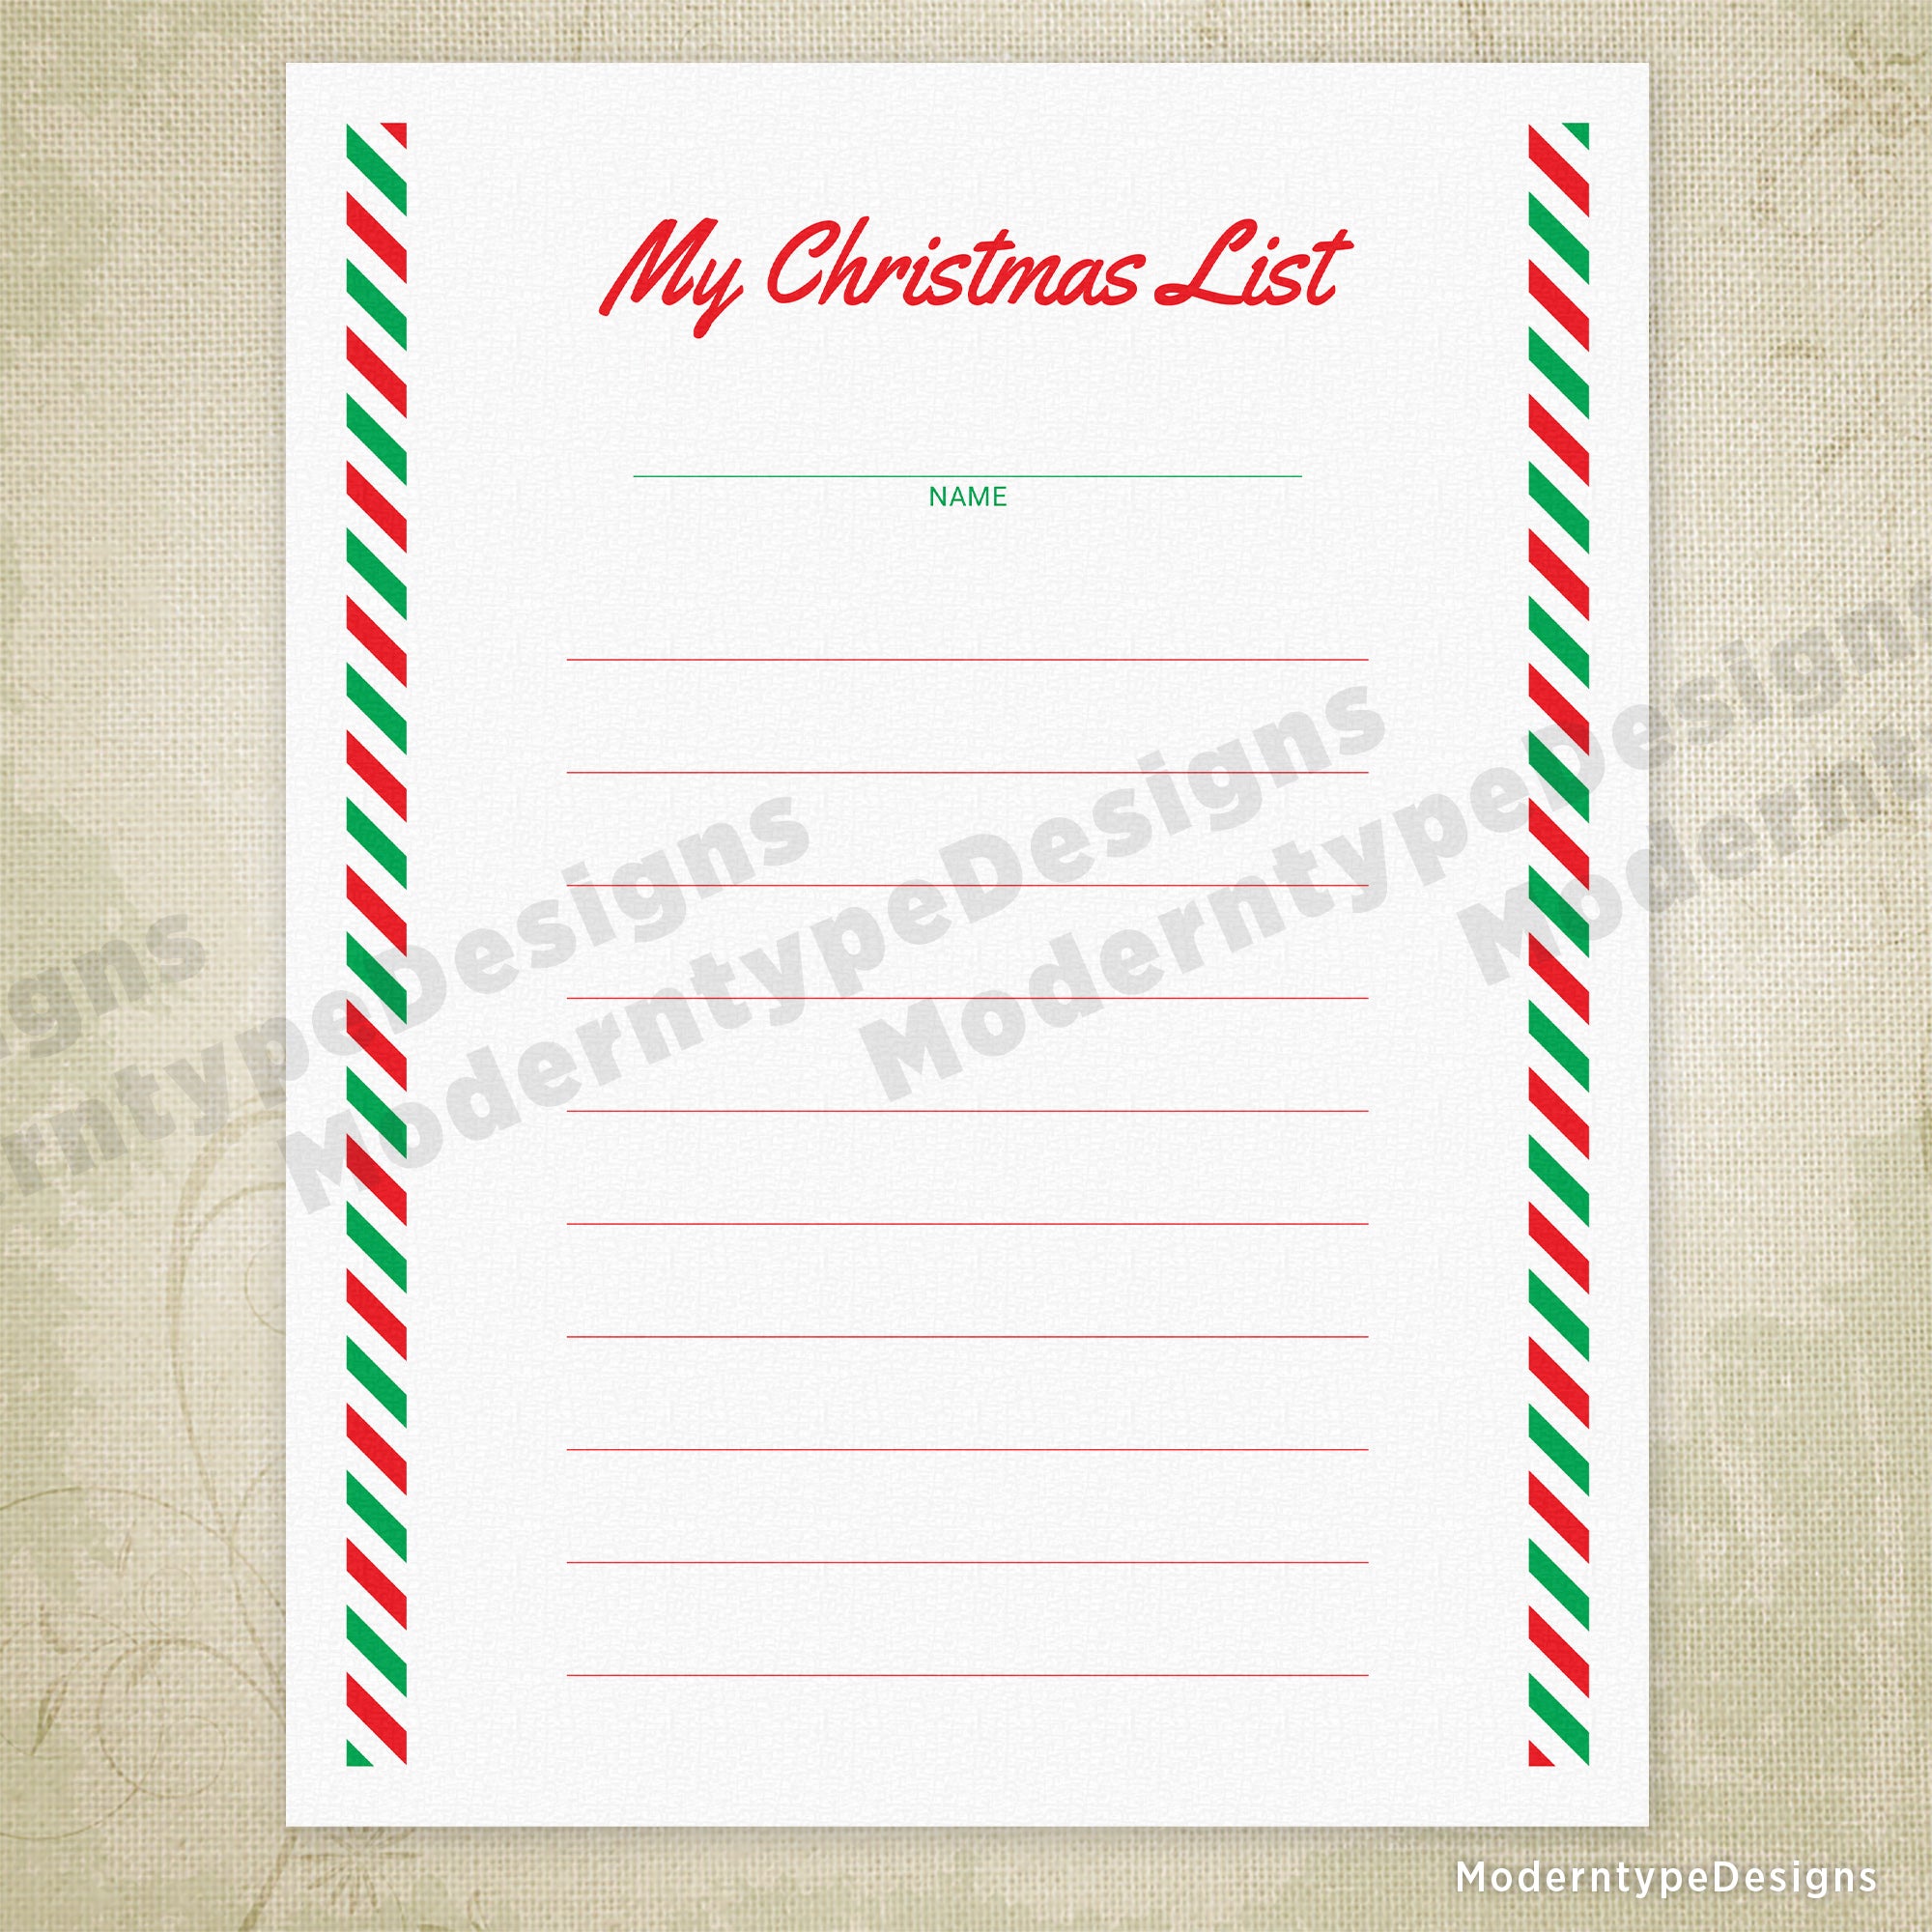 Christmas Letter & List Printables